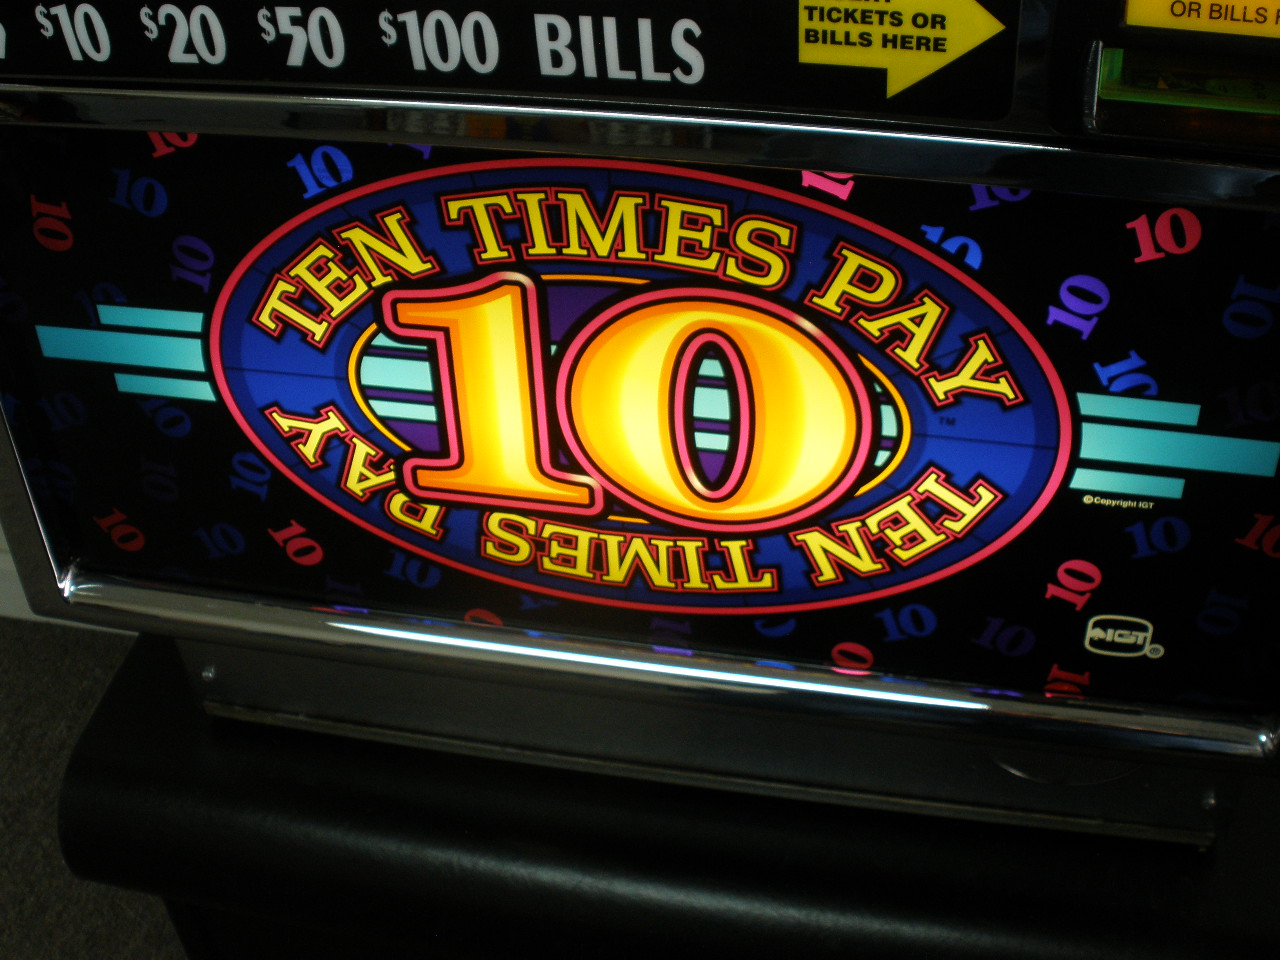 big times pay slot machine